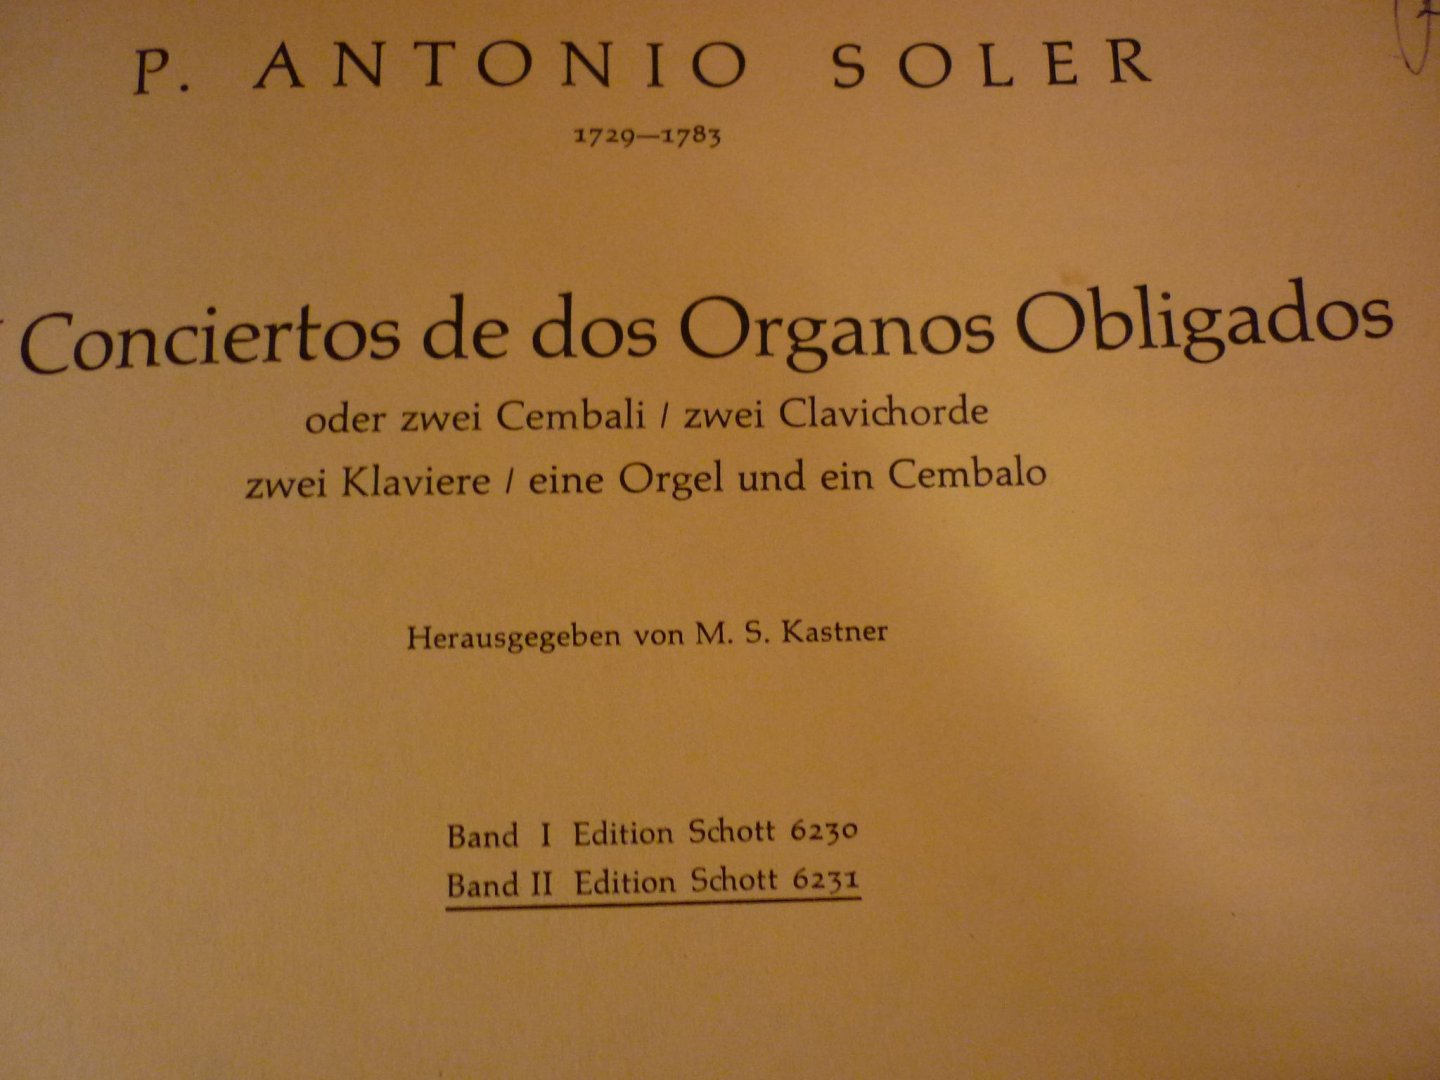 Soler; P. Antonio (1729-1783) - VI Conciertos de dos Organos Obligados; oder zwei Cembali zwei Clavichorde zwei Klaviere eine Orgel und ein Cembalo - Band II